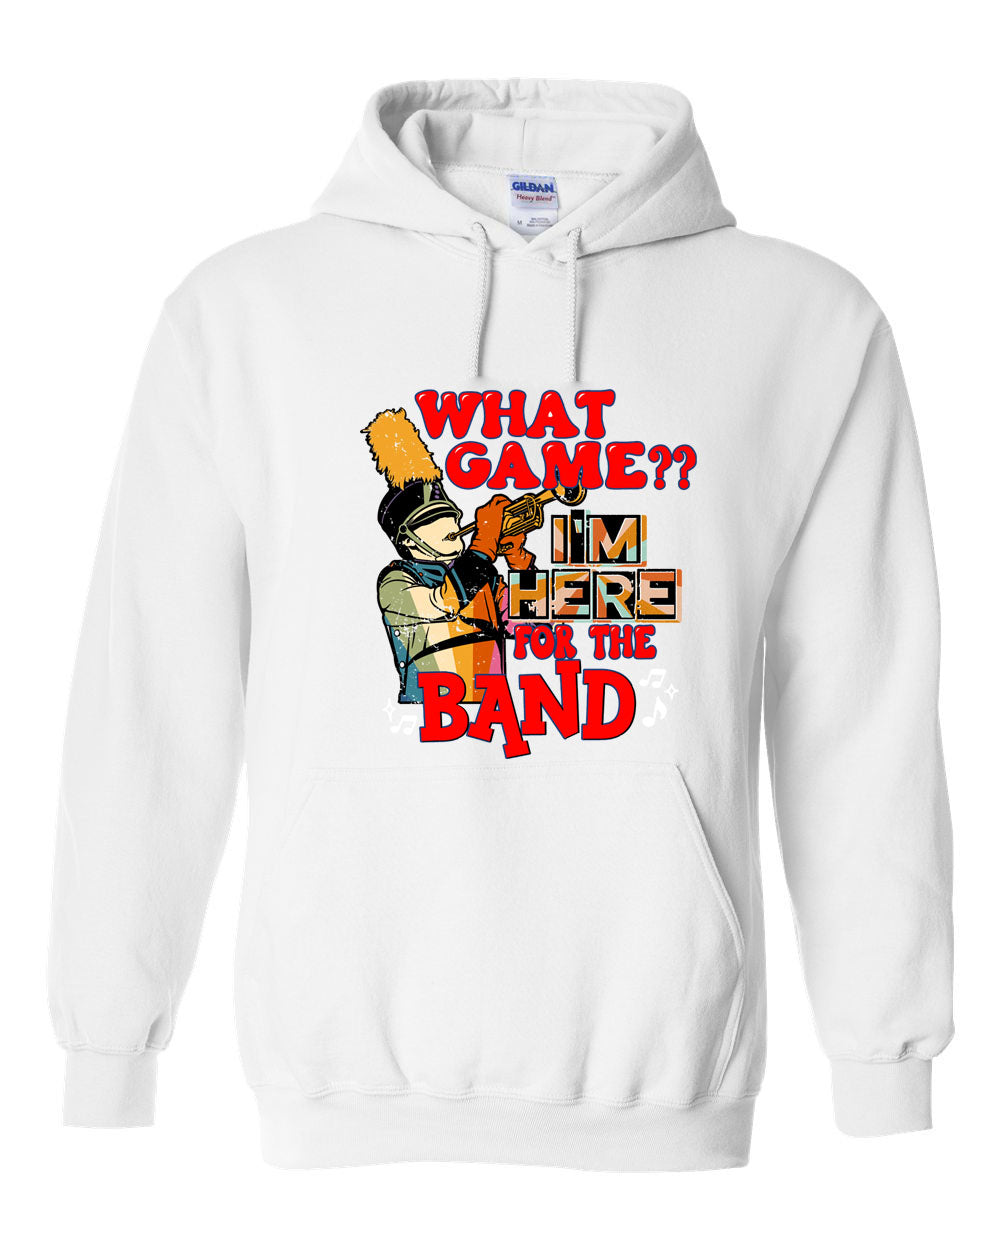 North Warren Band Design 2 Hooded Sweatshirt